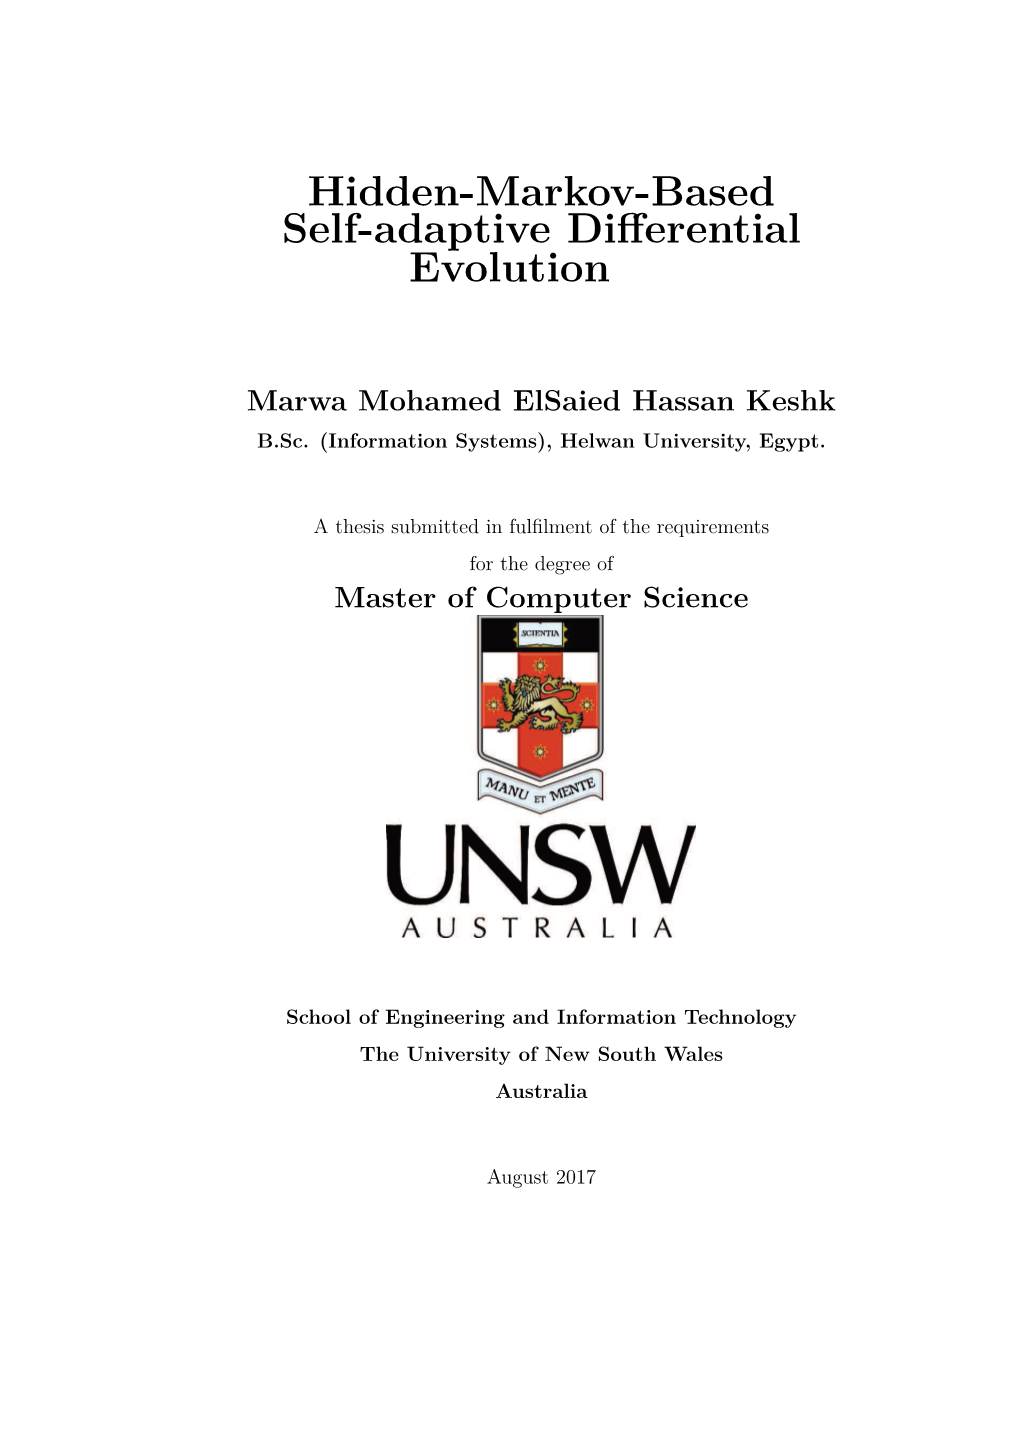 Hidden-Markov-Based Self-Adaptive Differential Evolution